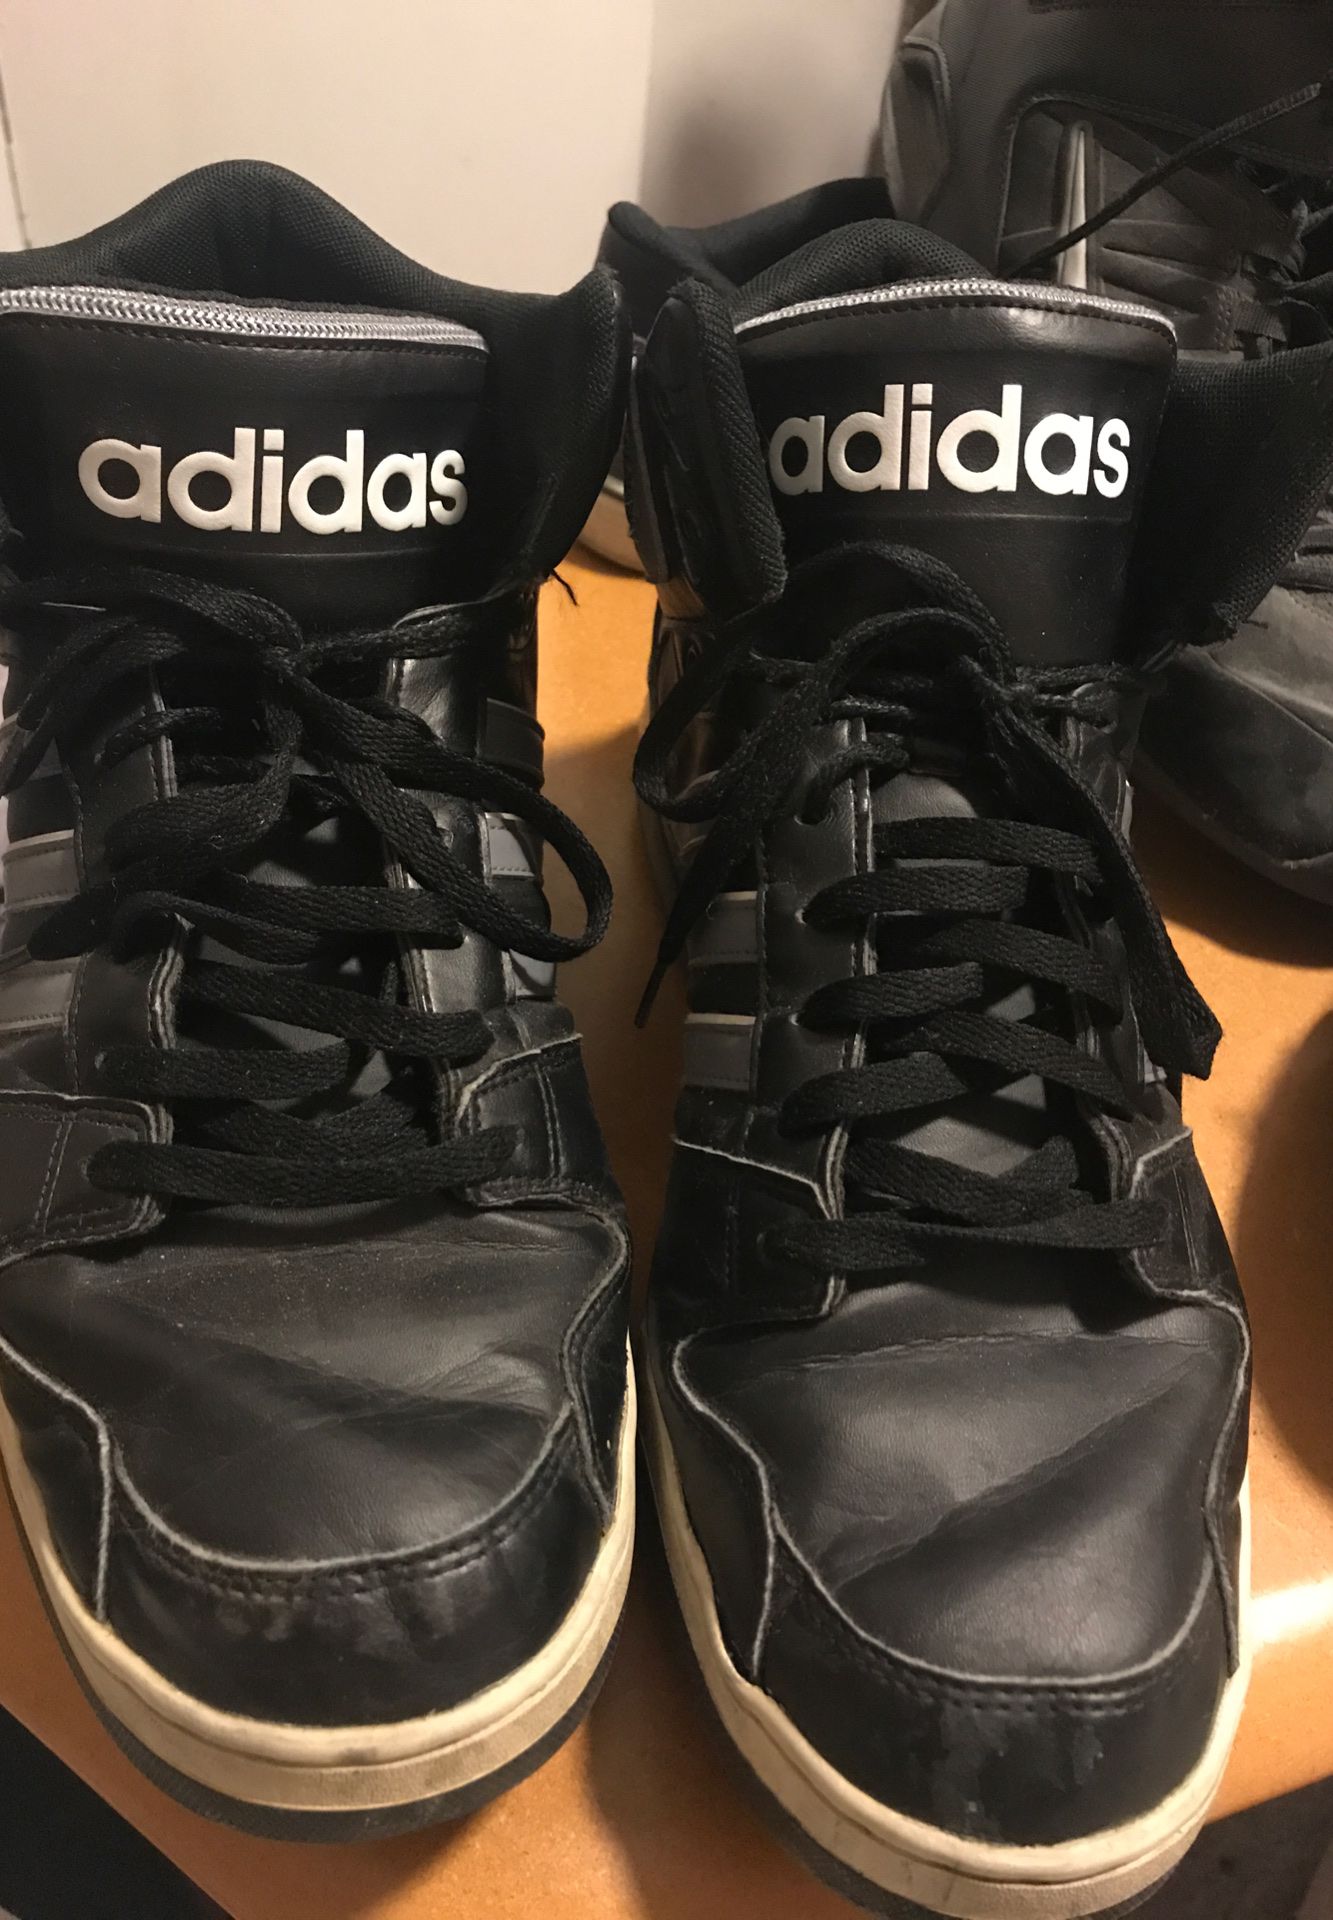 Adidas Black shoes size 13